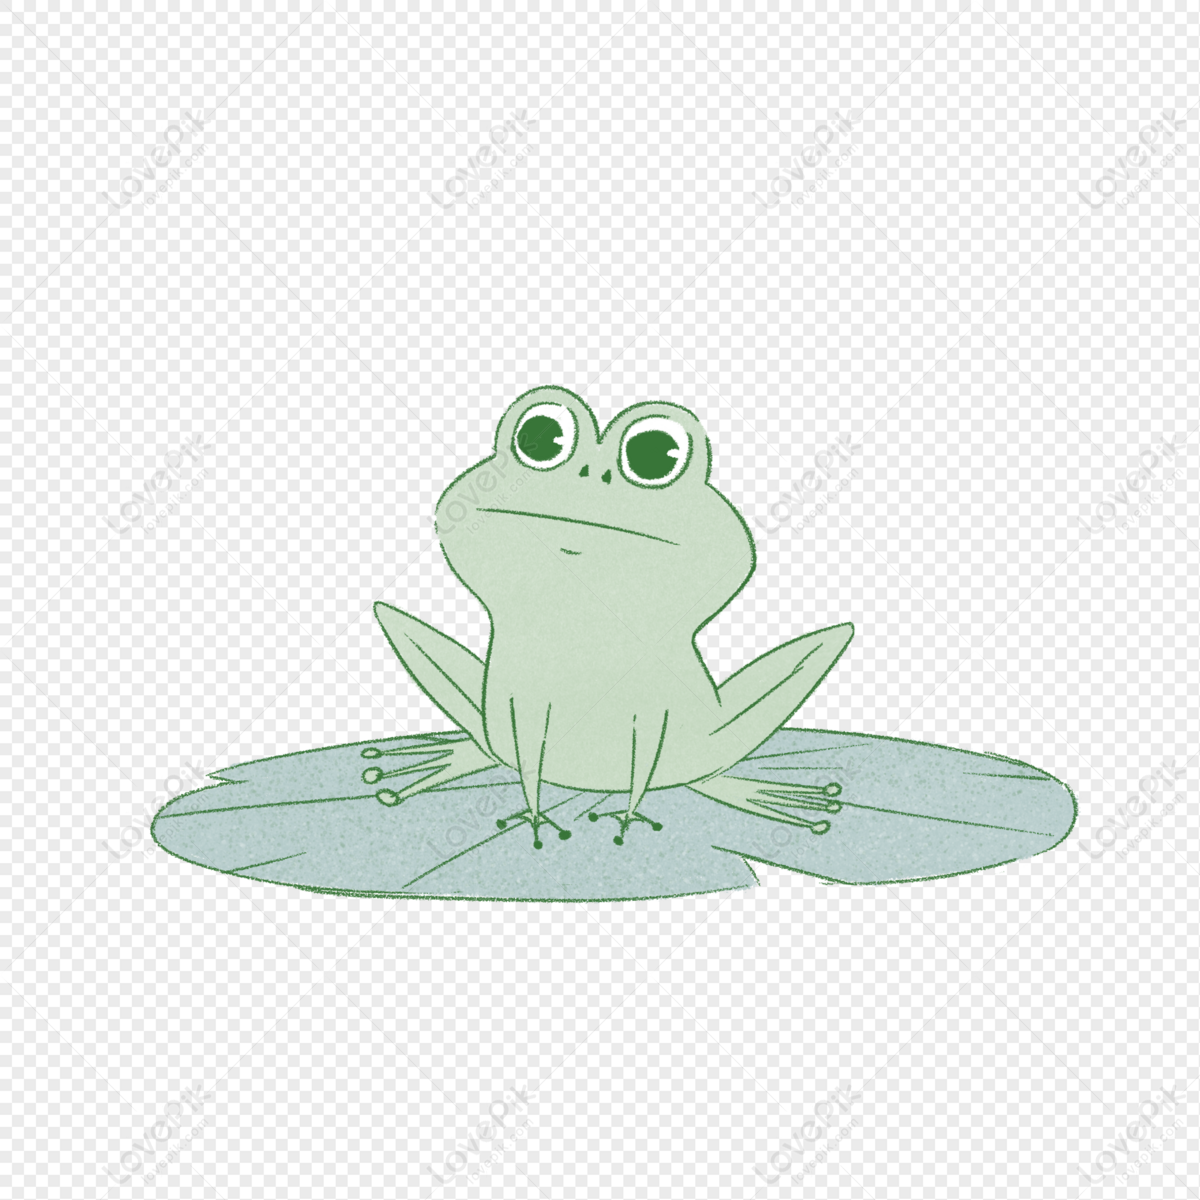 https://img.lovepik.com/free-png/20211211/lovepik-little-frog-cartoon-image-png-image_401484328_wh1200.png